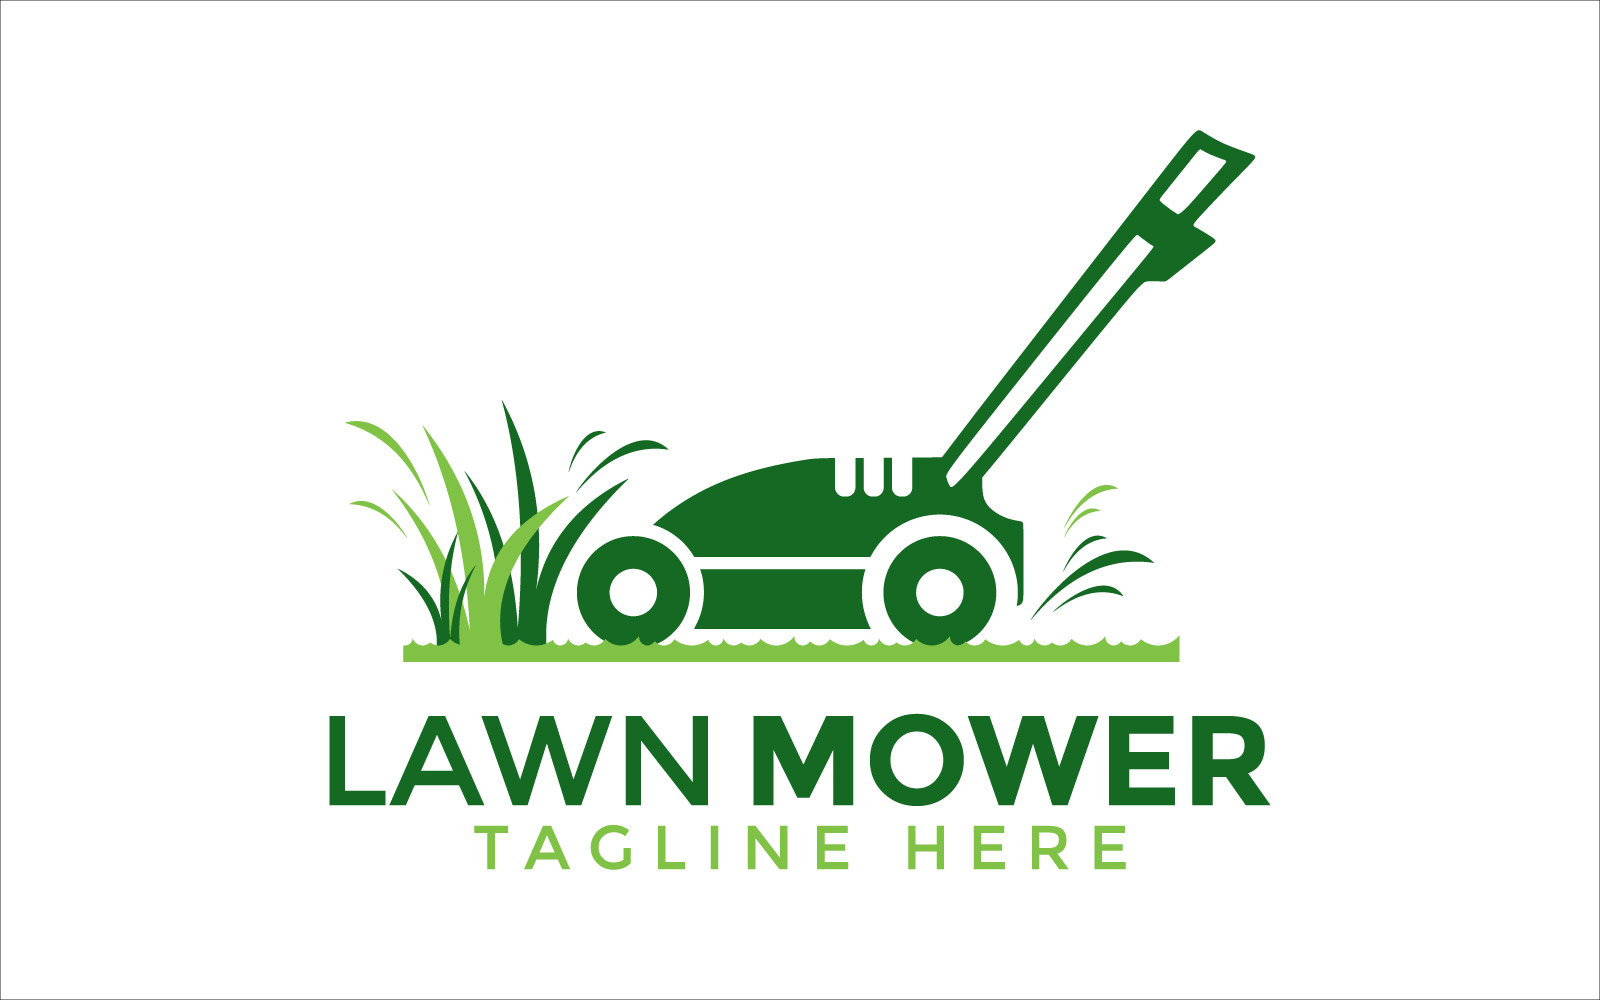 Lawn mower vector design template